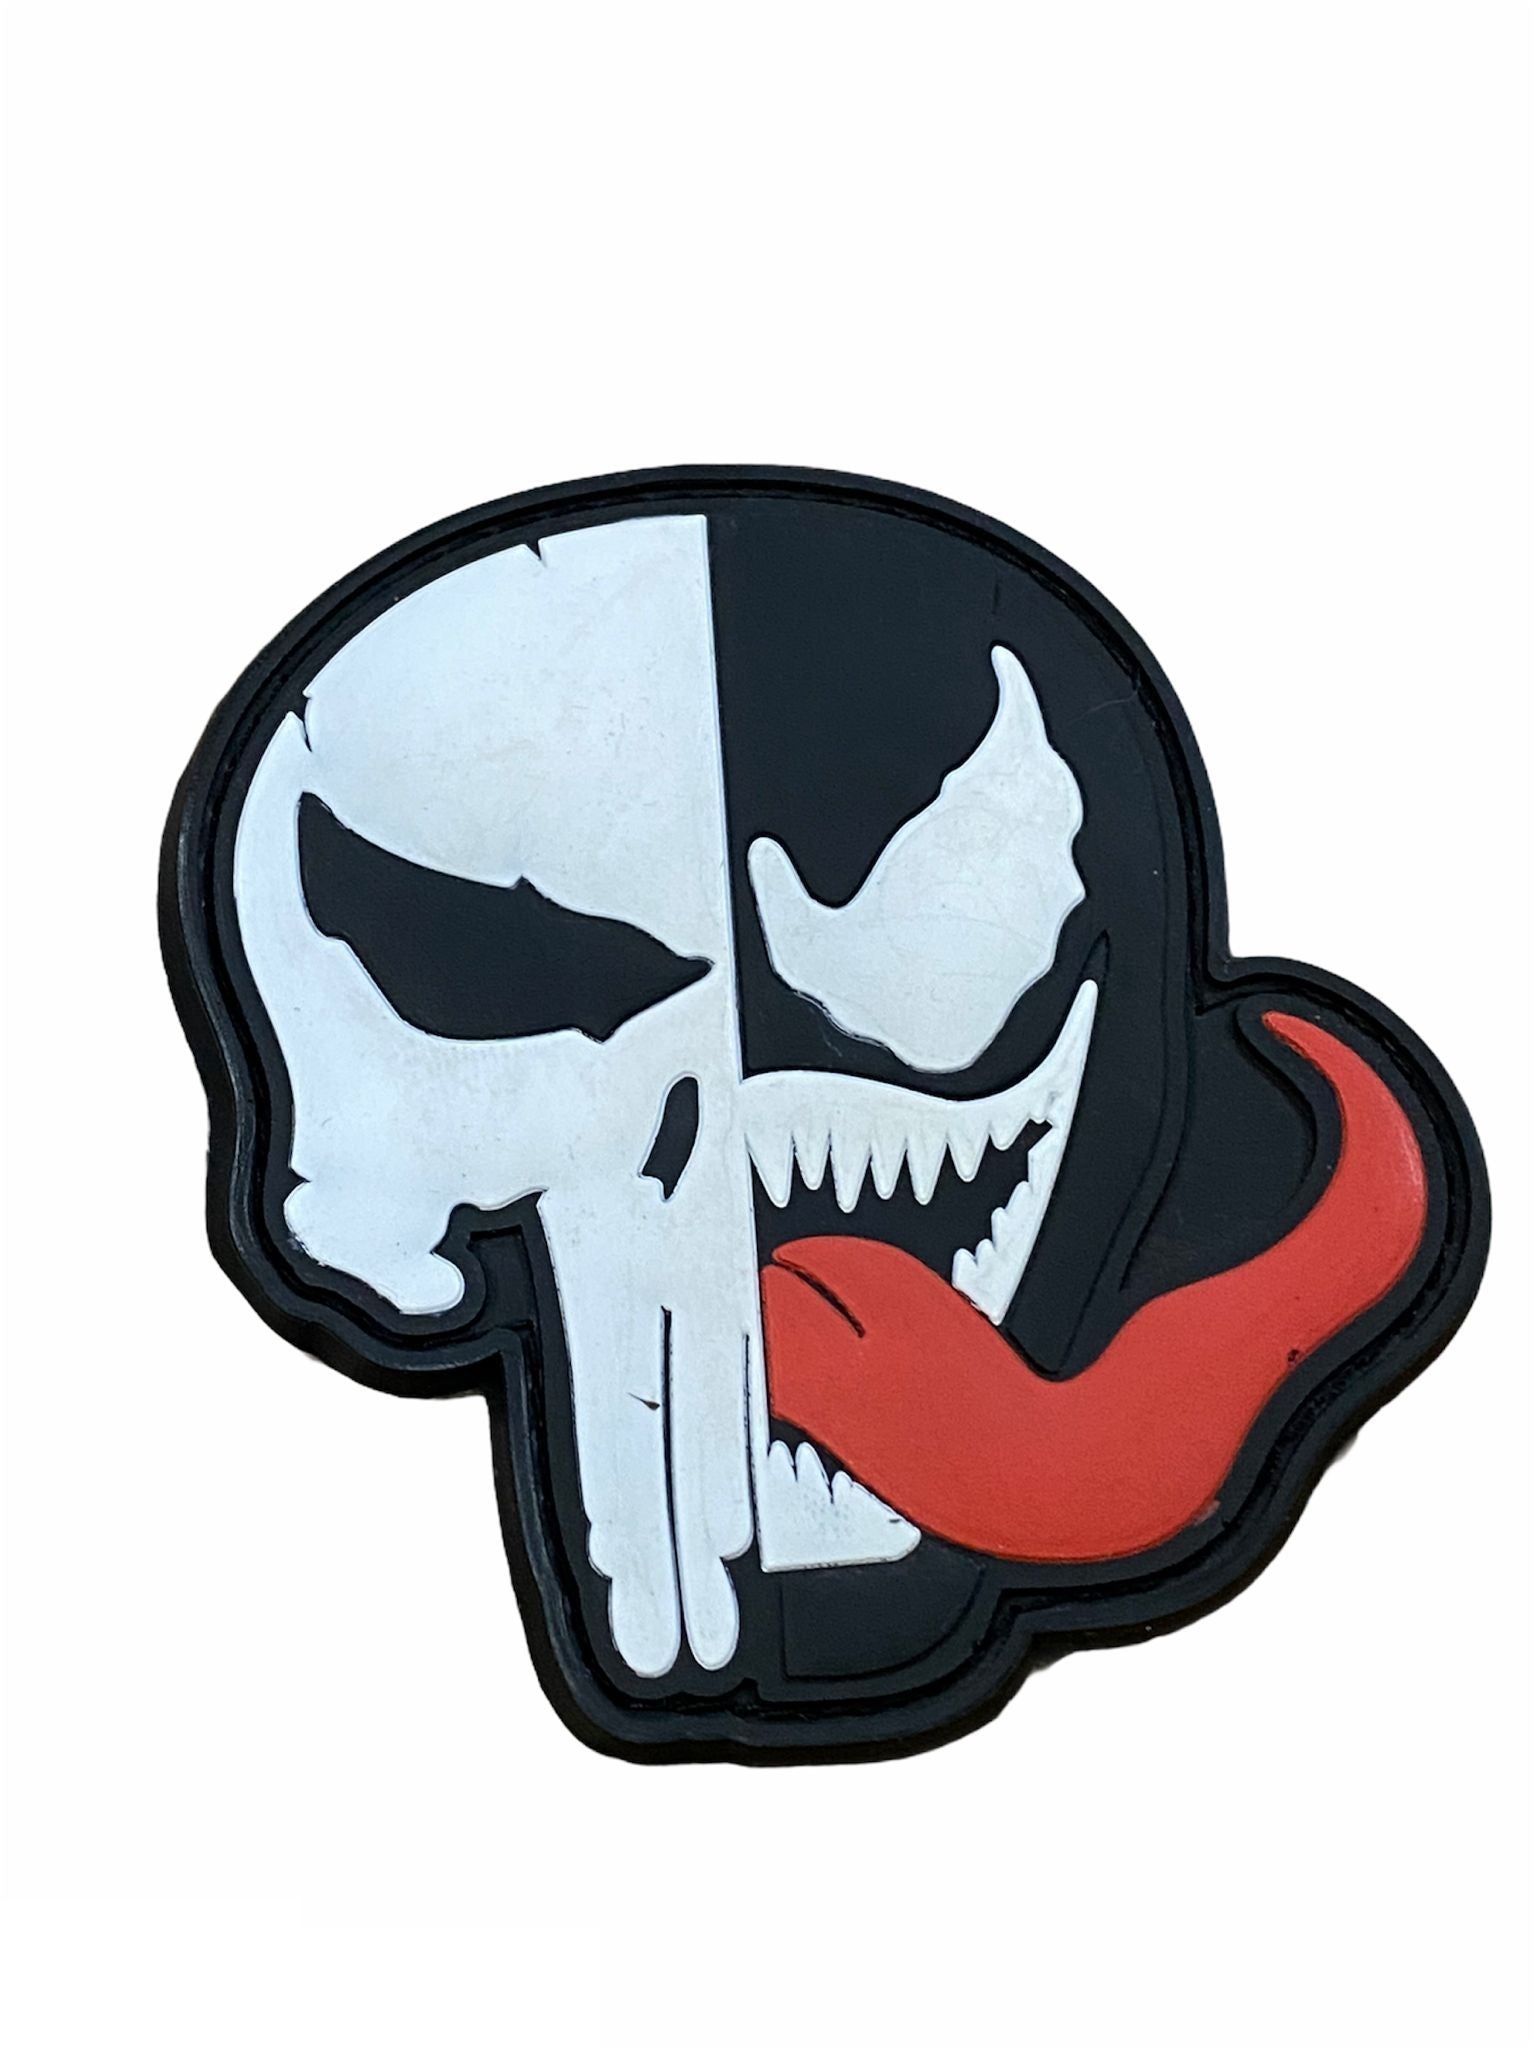 Patch Venom/Punisher